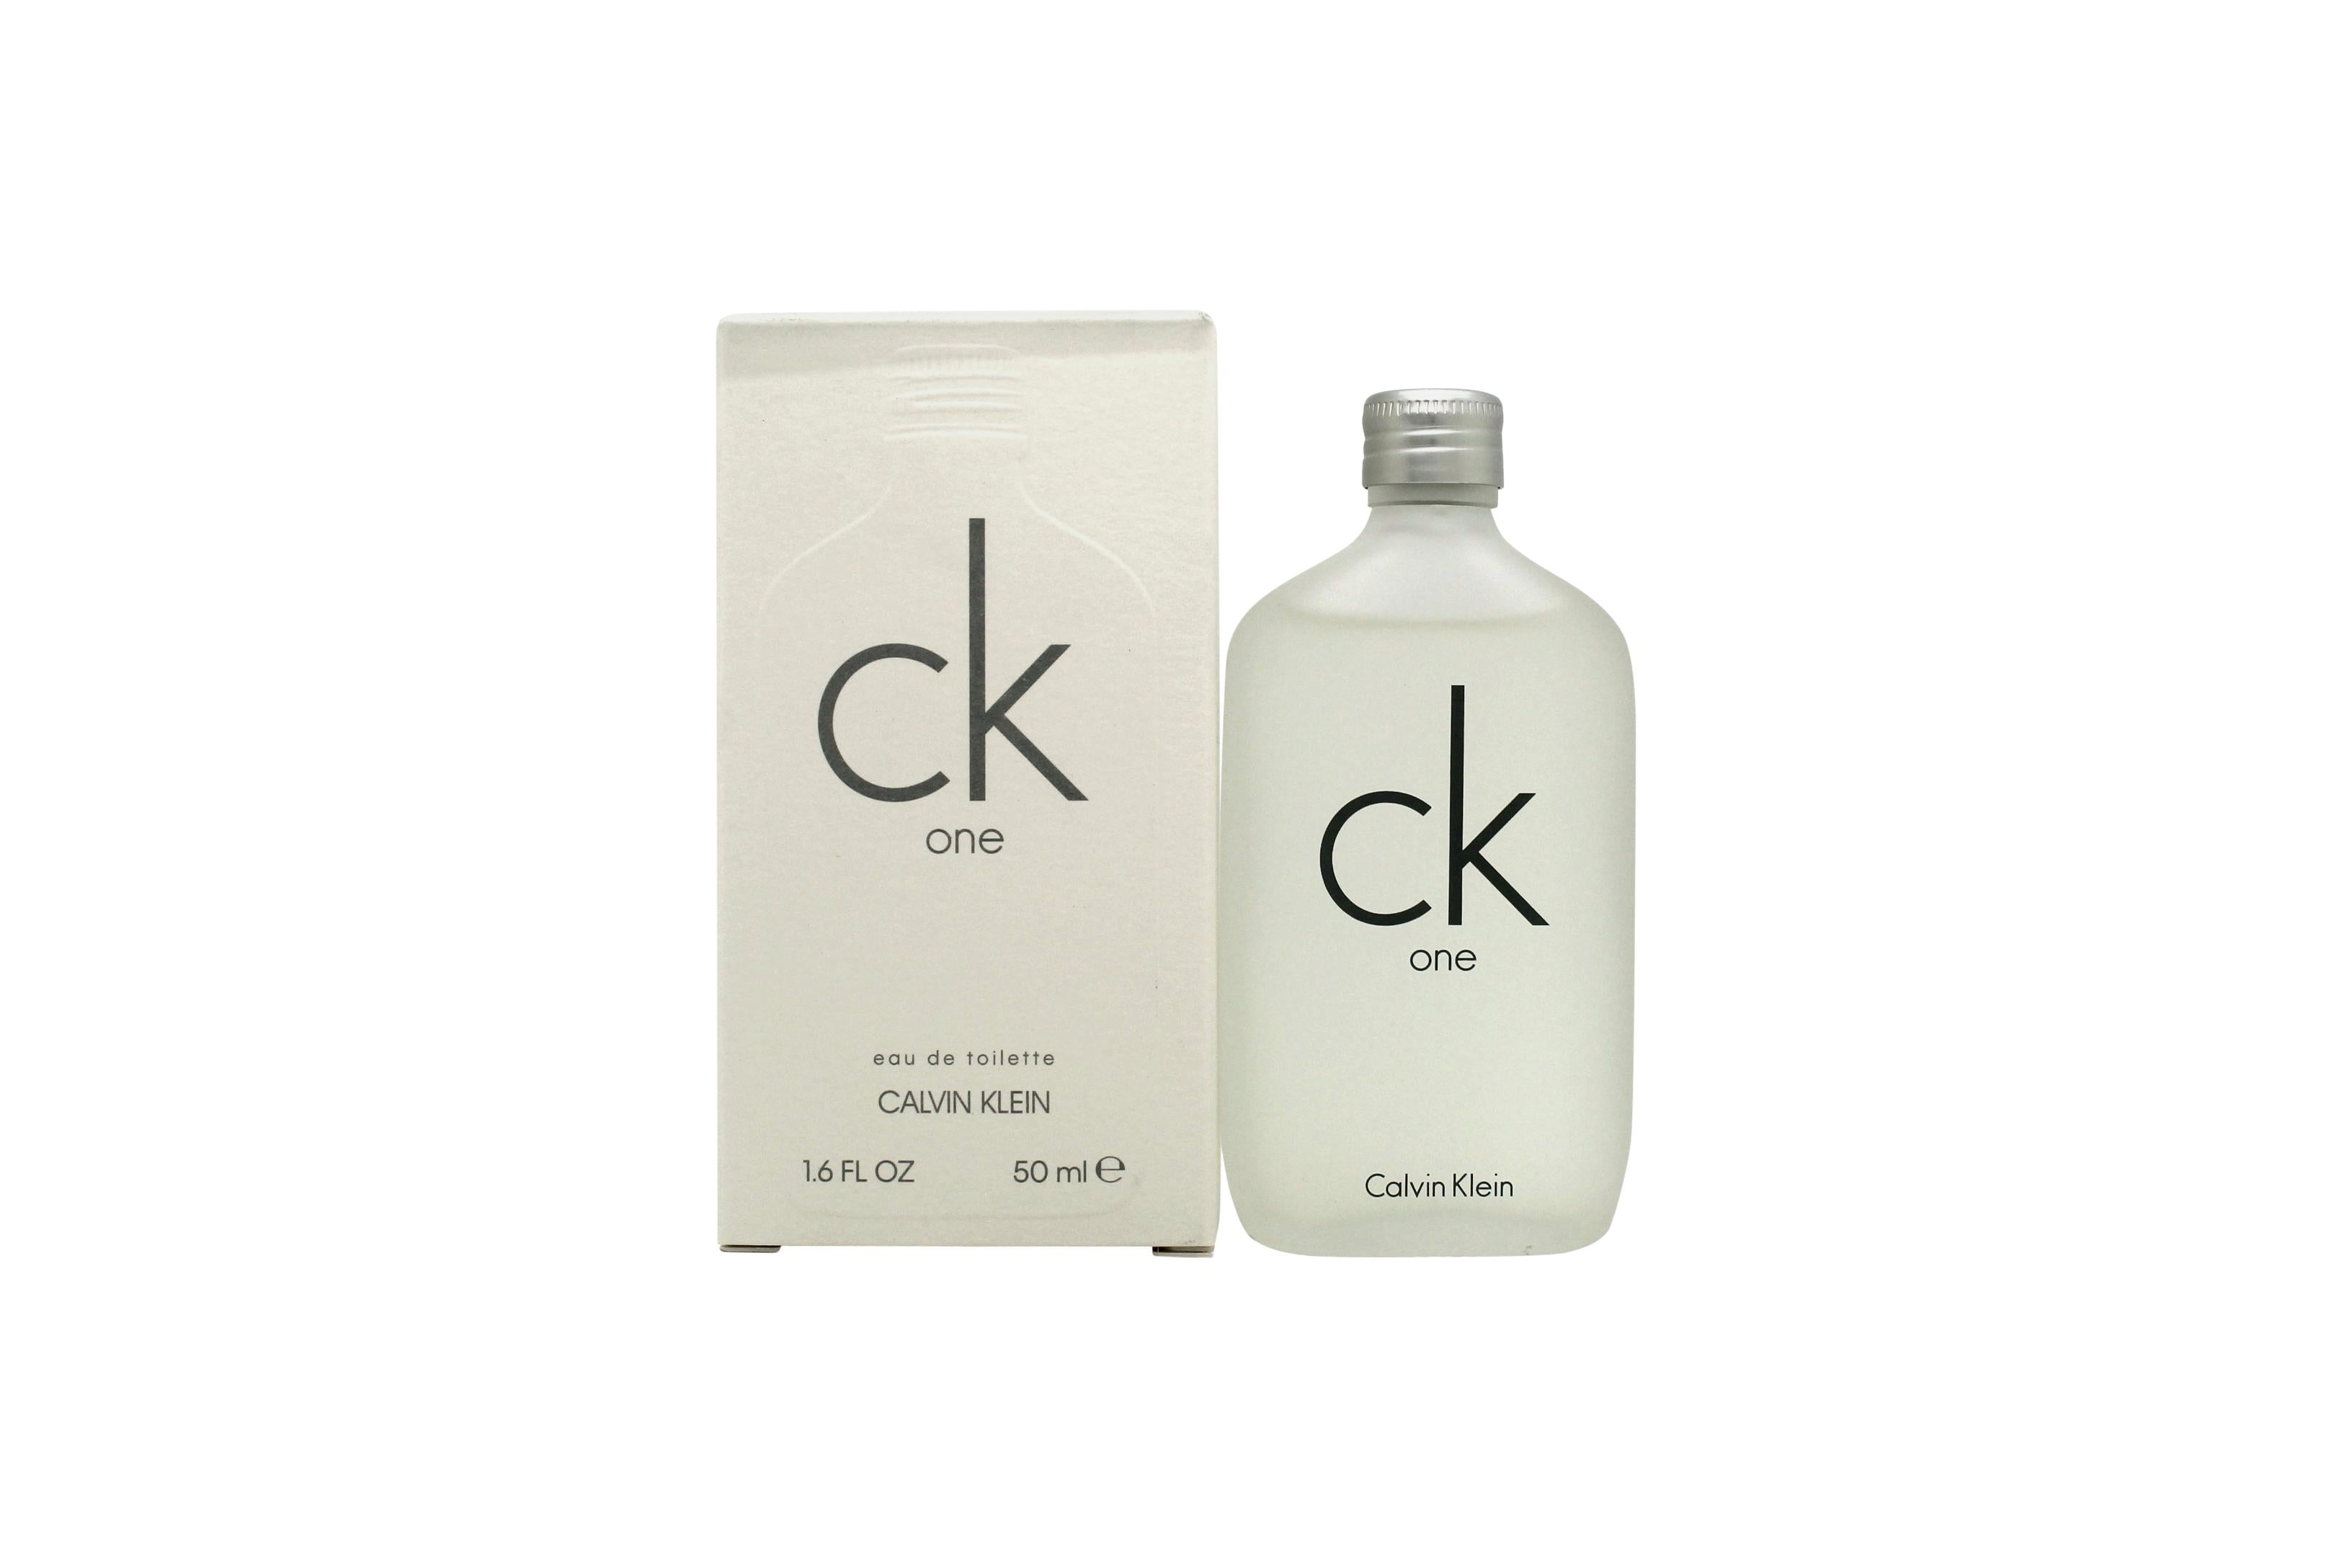 View Calvin Klein CK One Eau de Toilette 50ml Spray information